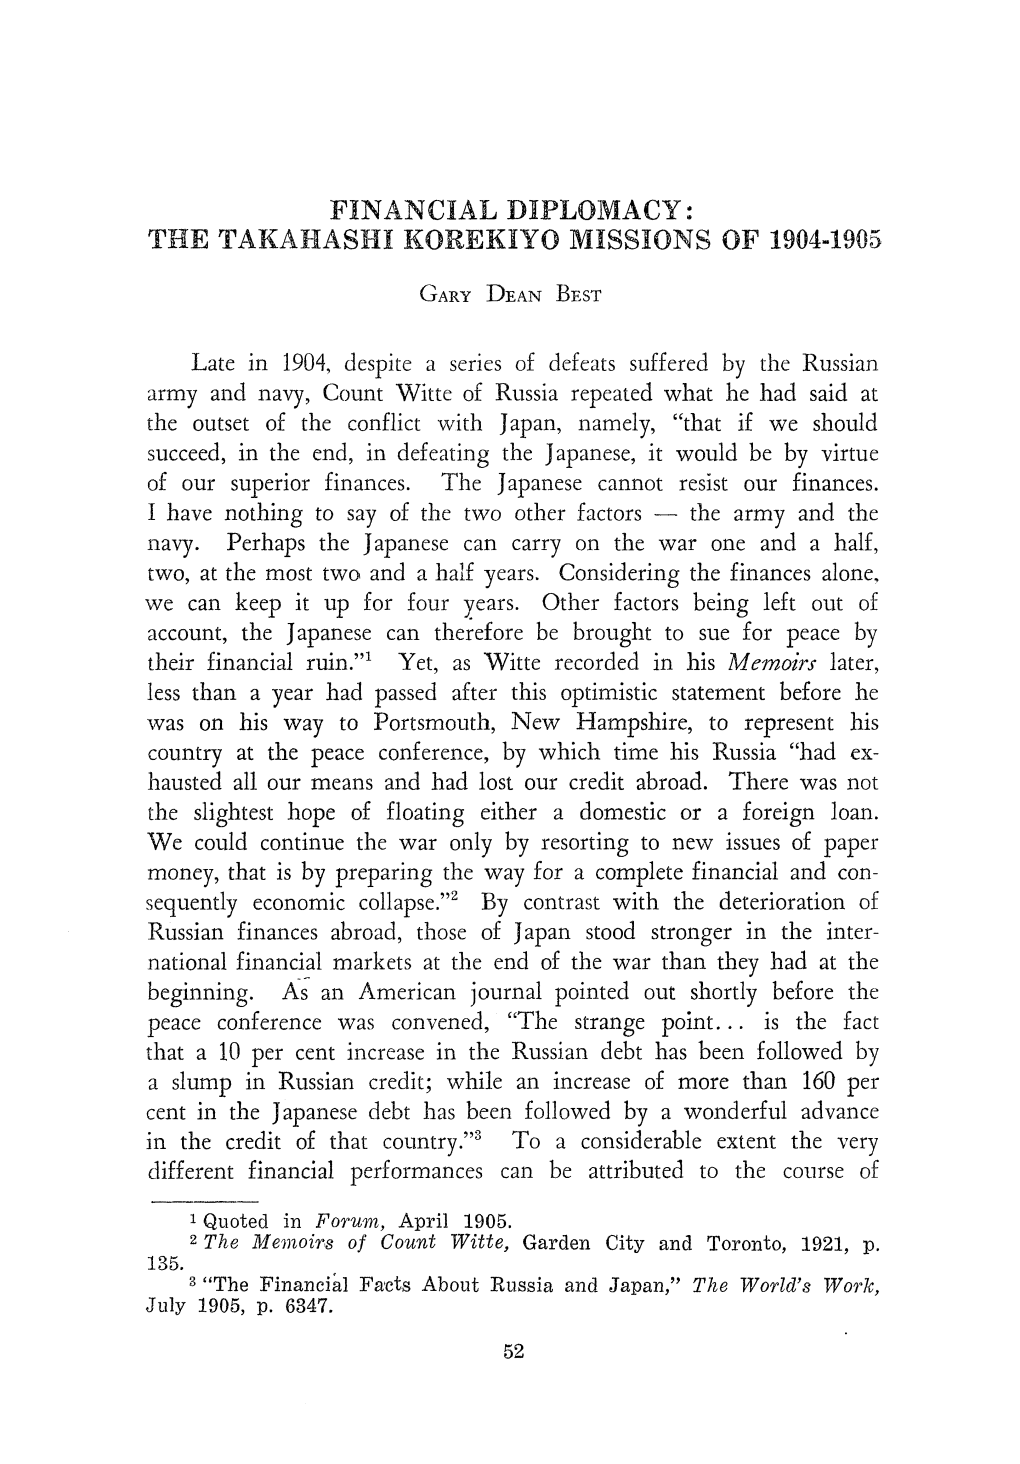 Takahashi Korekiyo Missions of 1904-1905